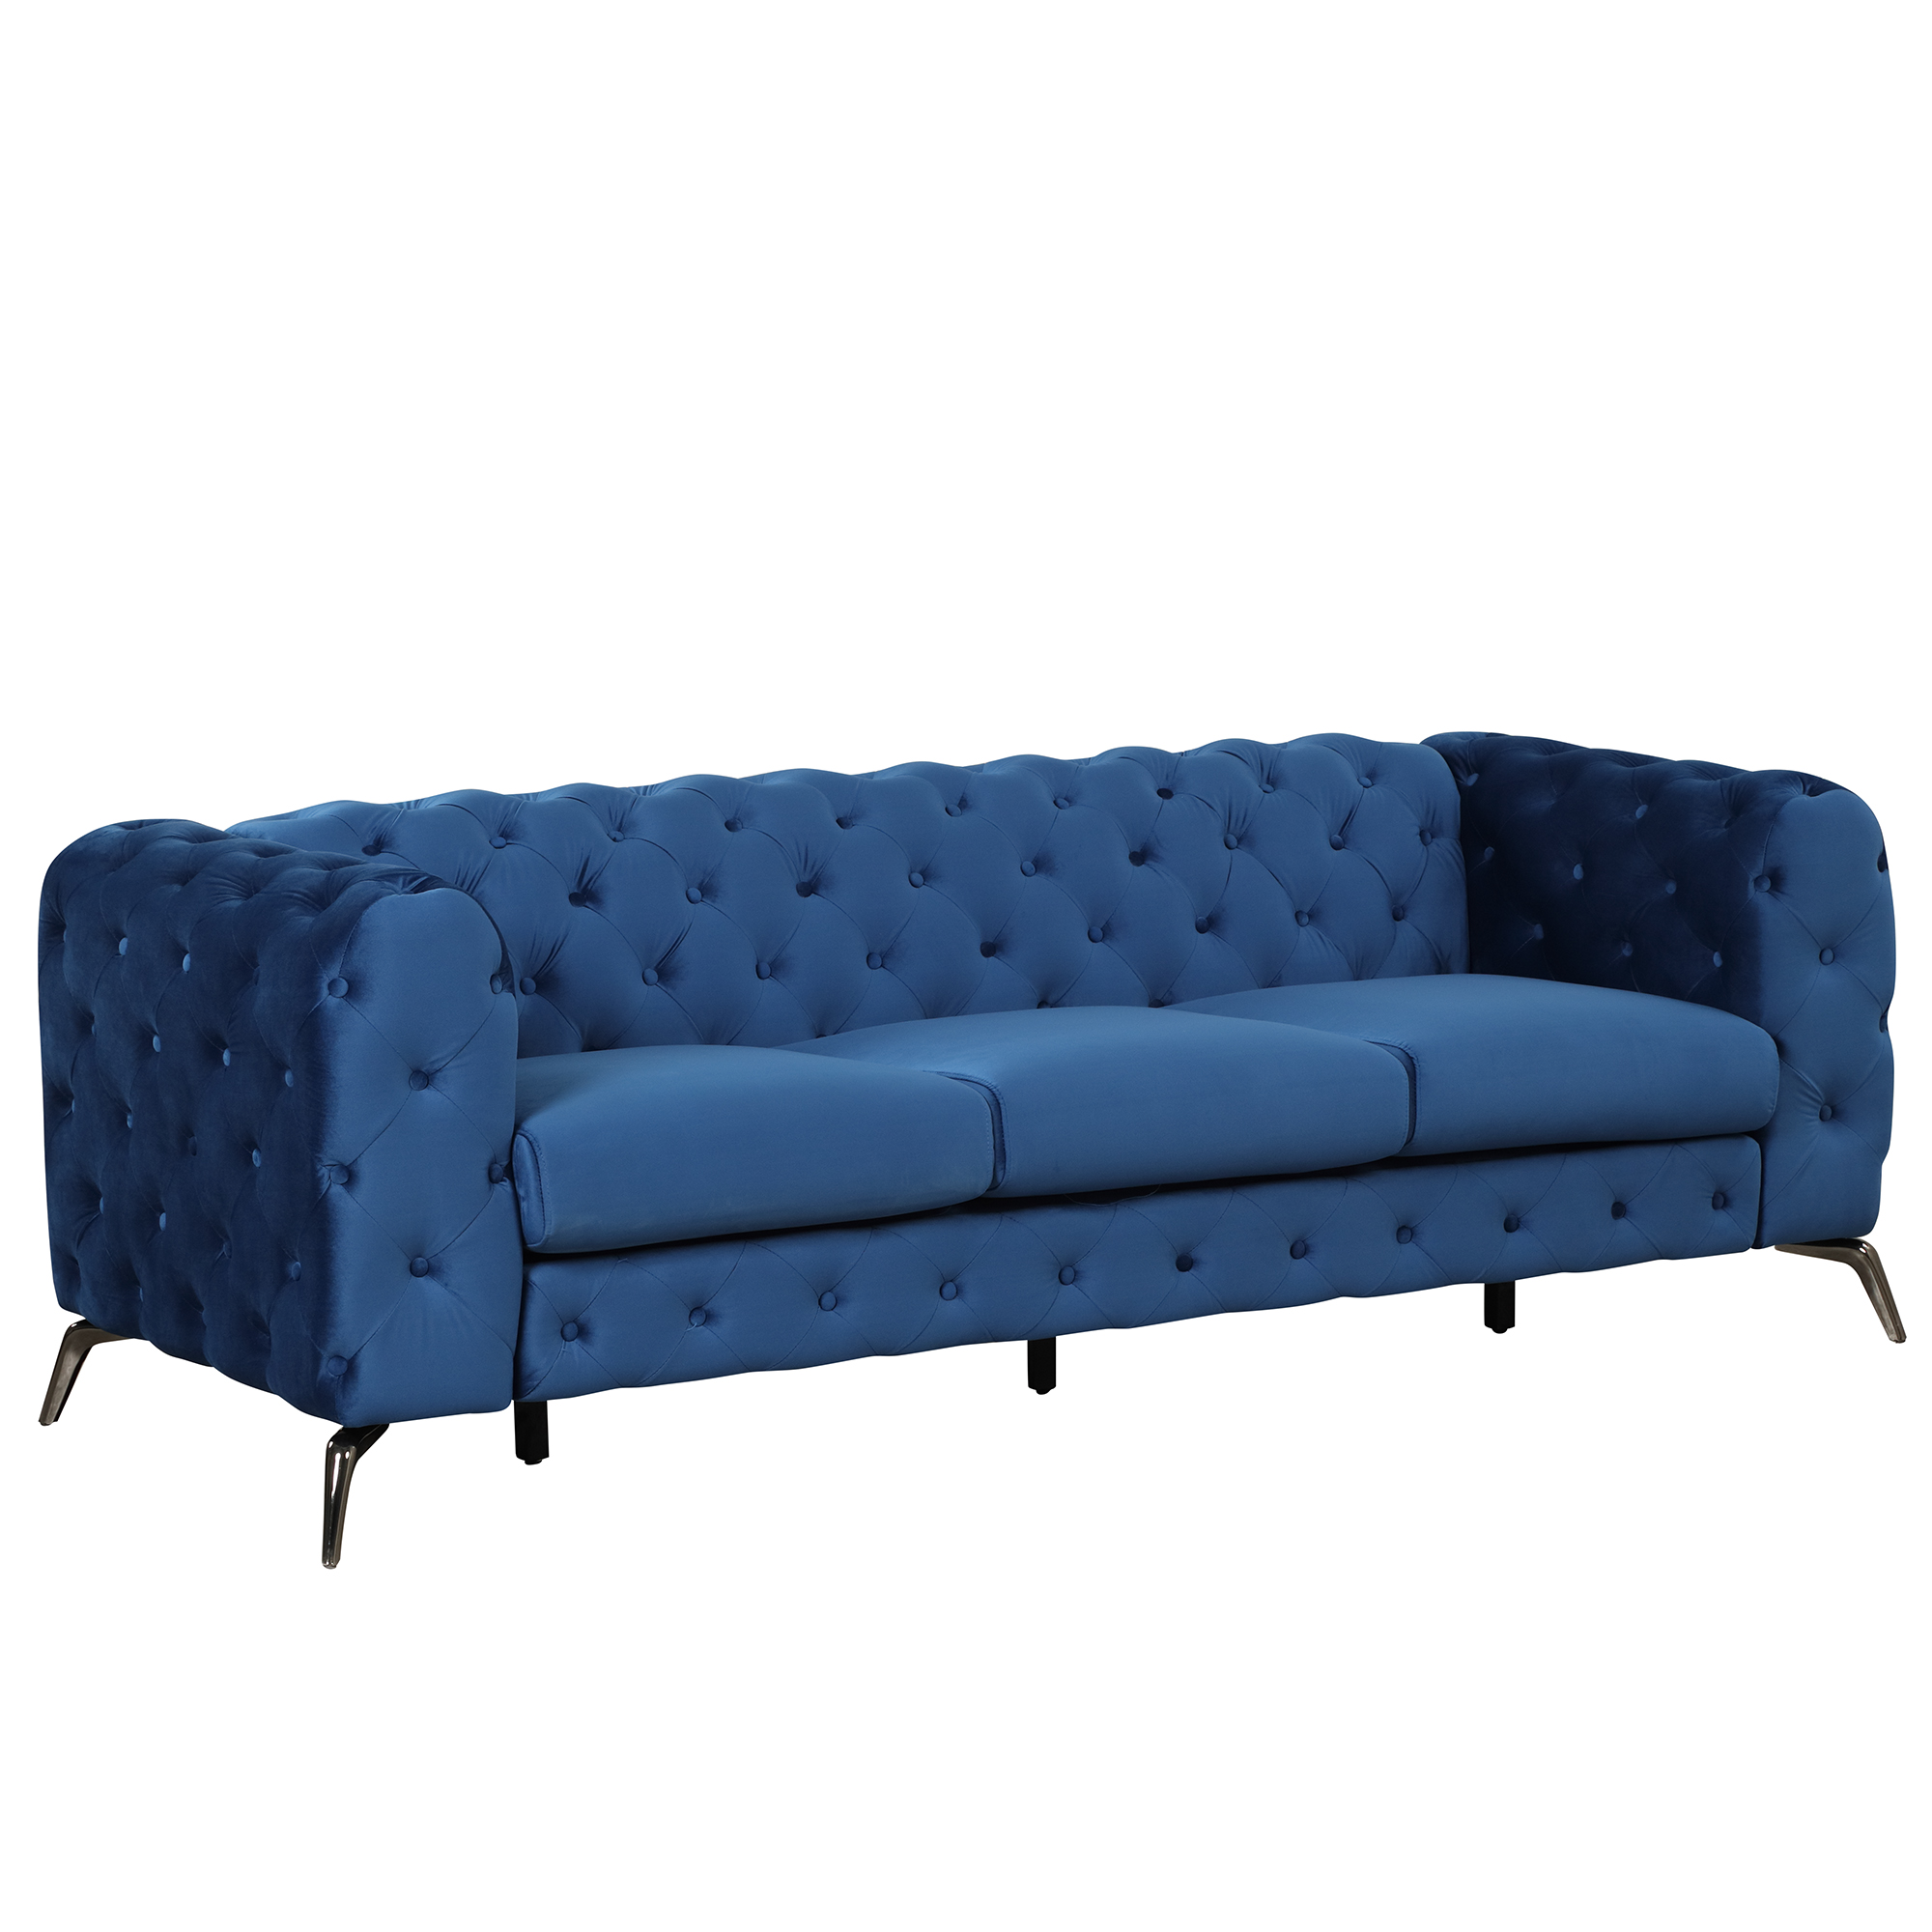 Velvet Upholstered Sofa With Sturdy Metal Legs - SG000603AAC